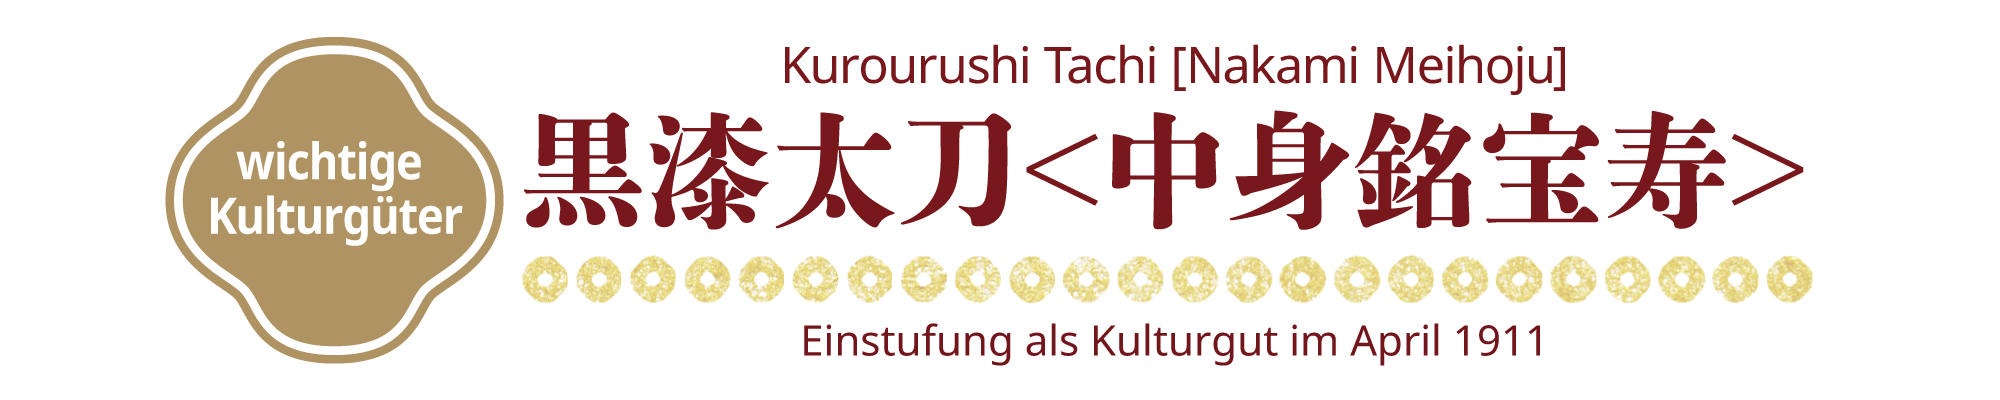 [wichtige Kulturgüter]Kurourushi Tachi [Nakami Meihoju], Einstufung als Kulturgut im April 1911